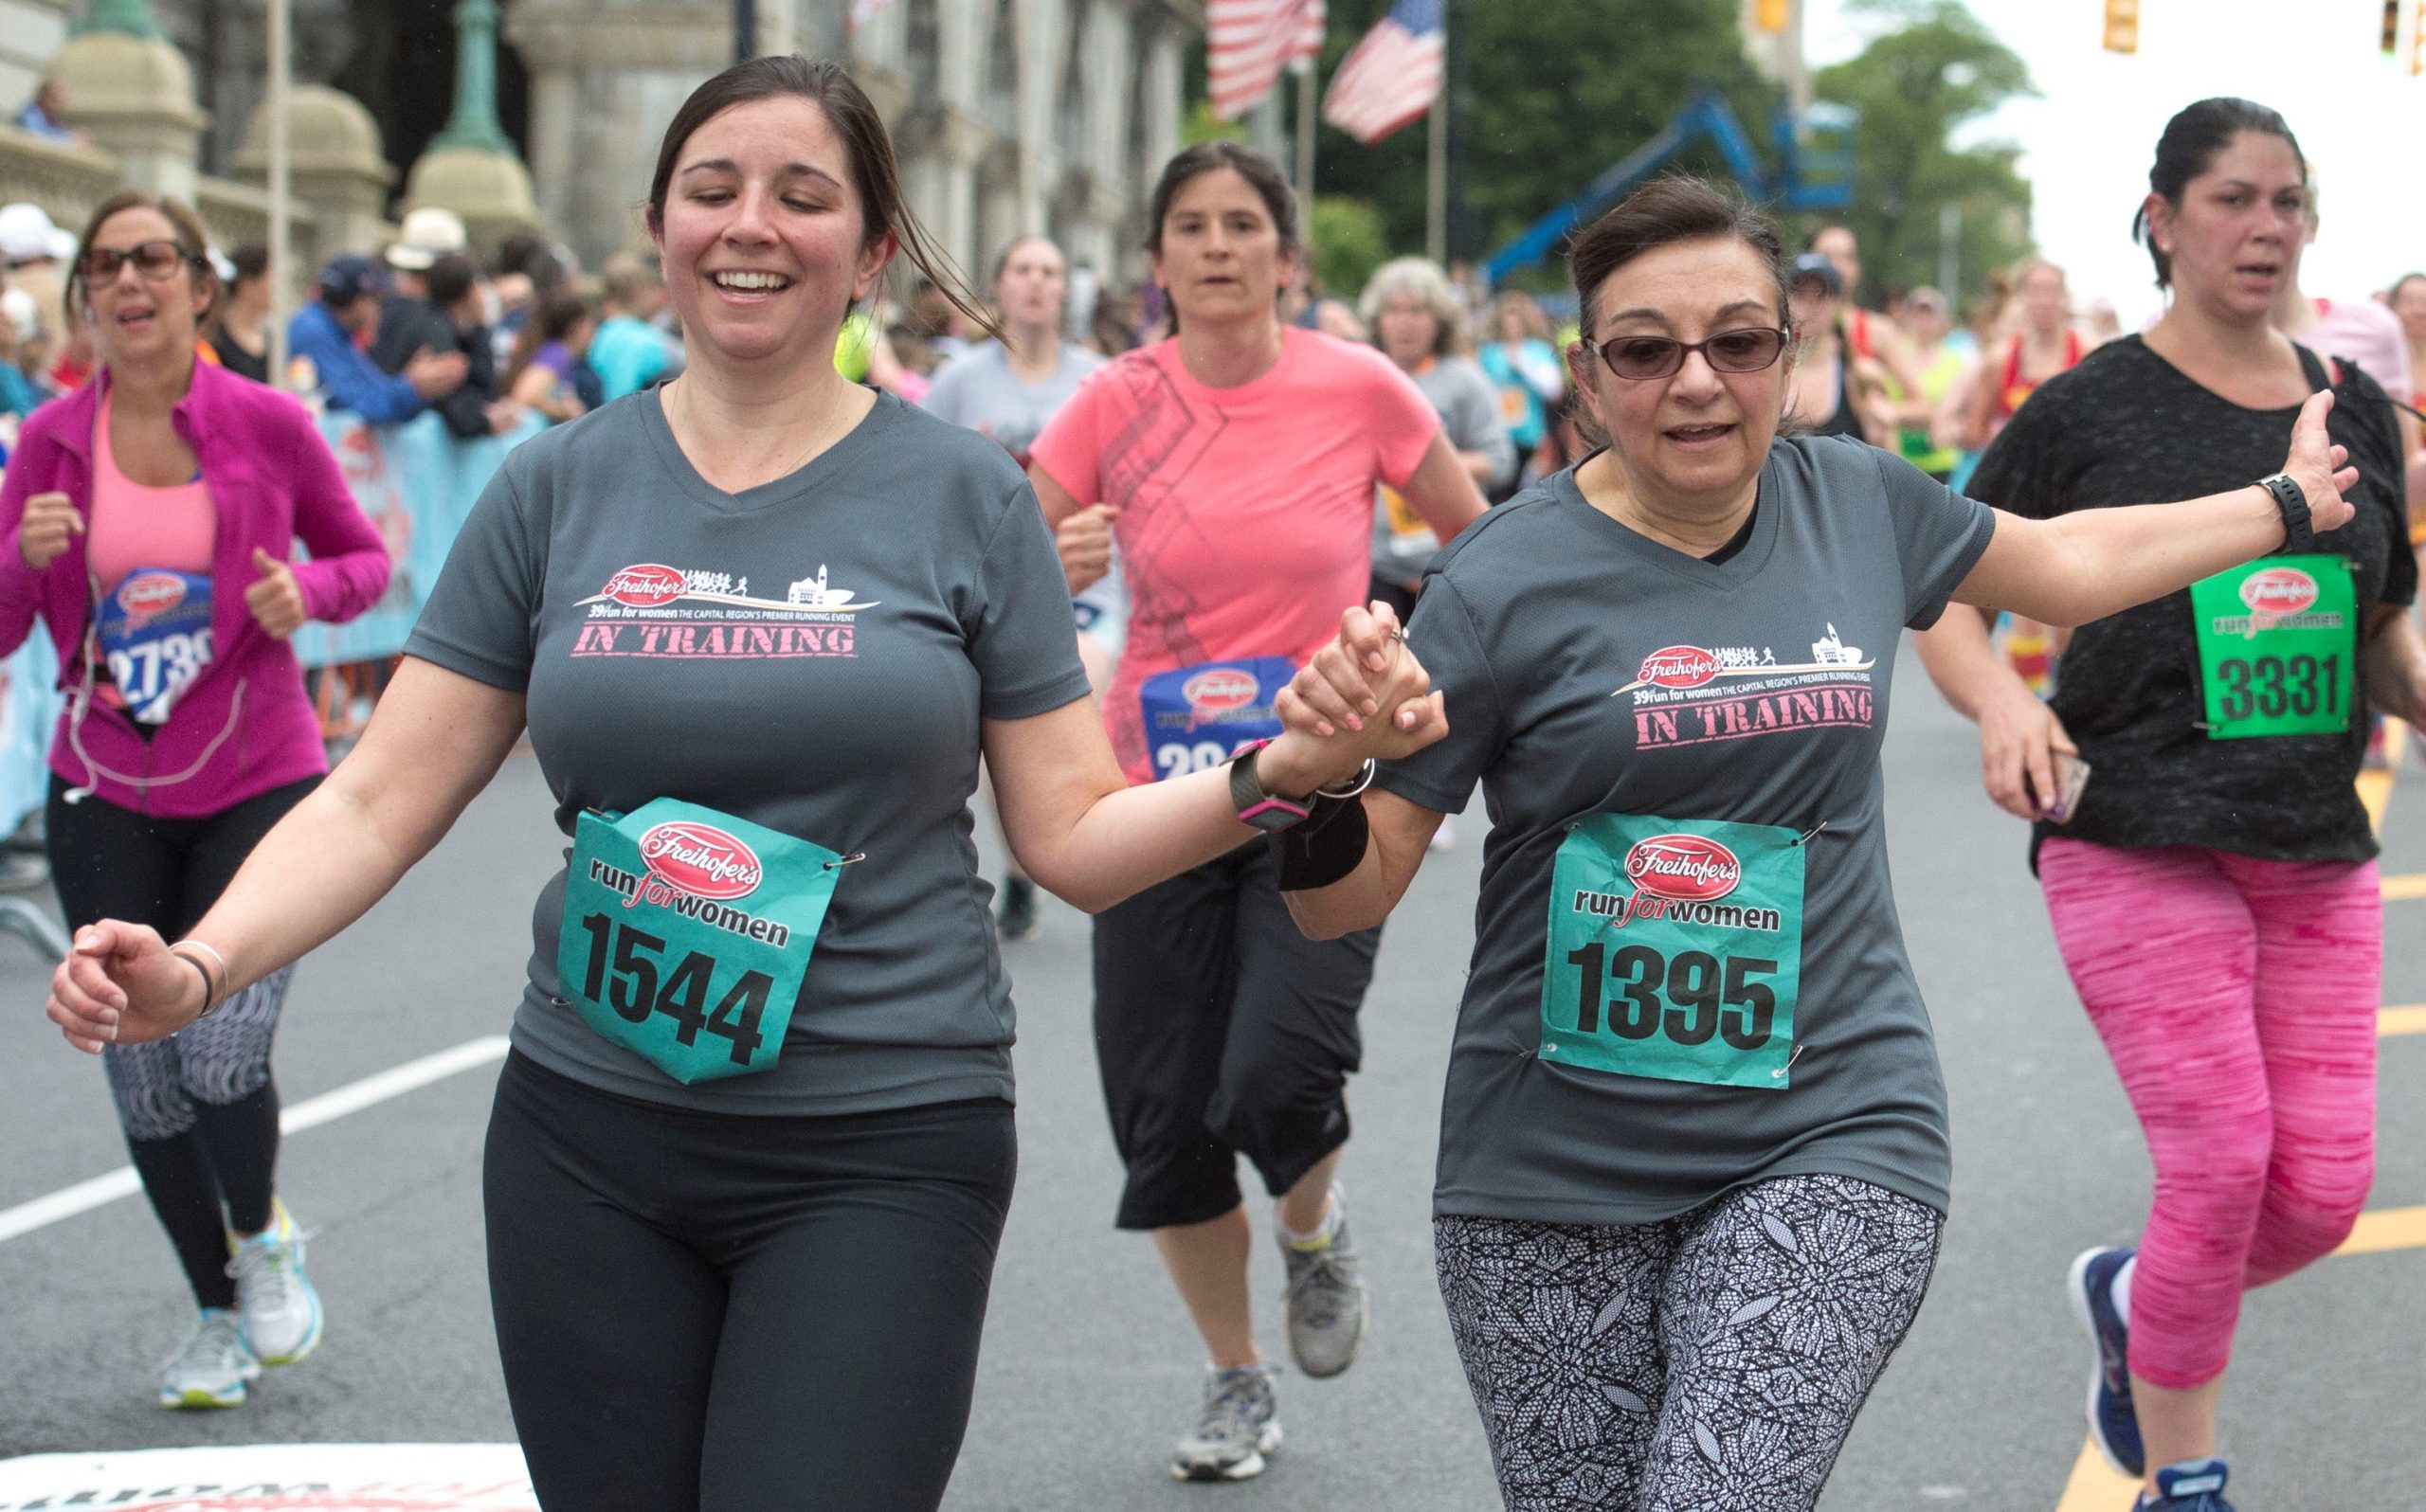 Run for Women (@runforwomen) • Instagram photos and videos